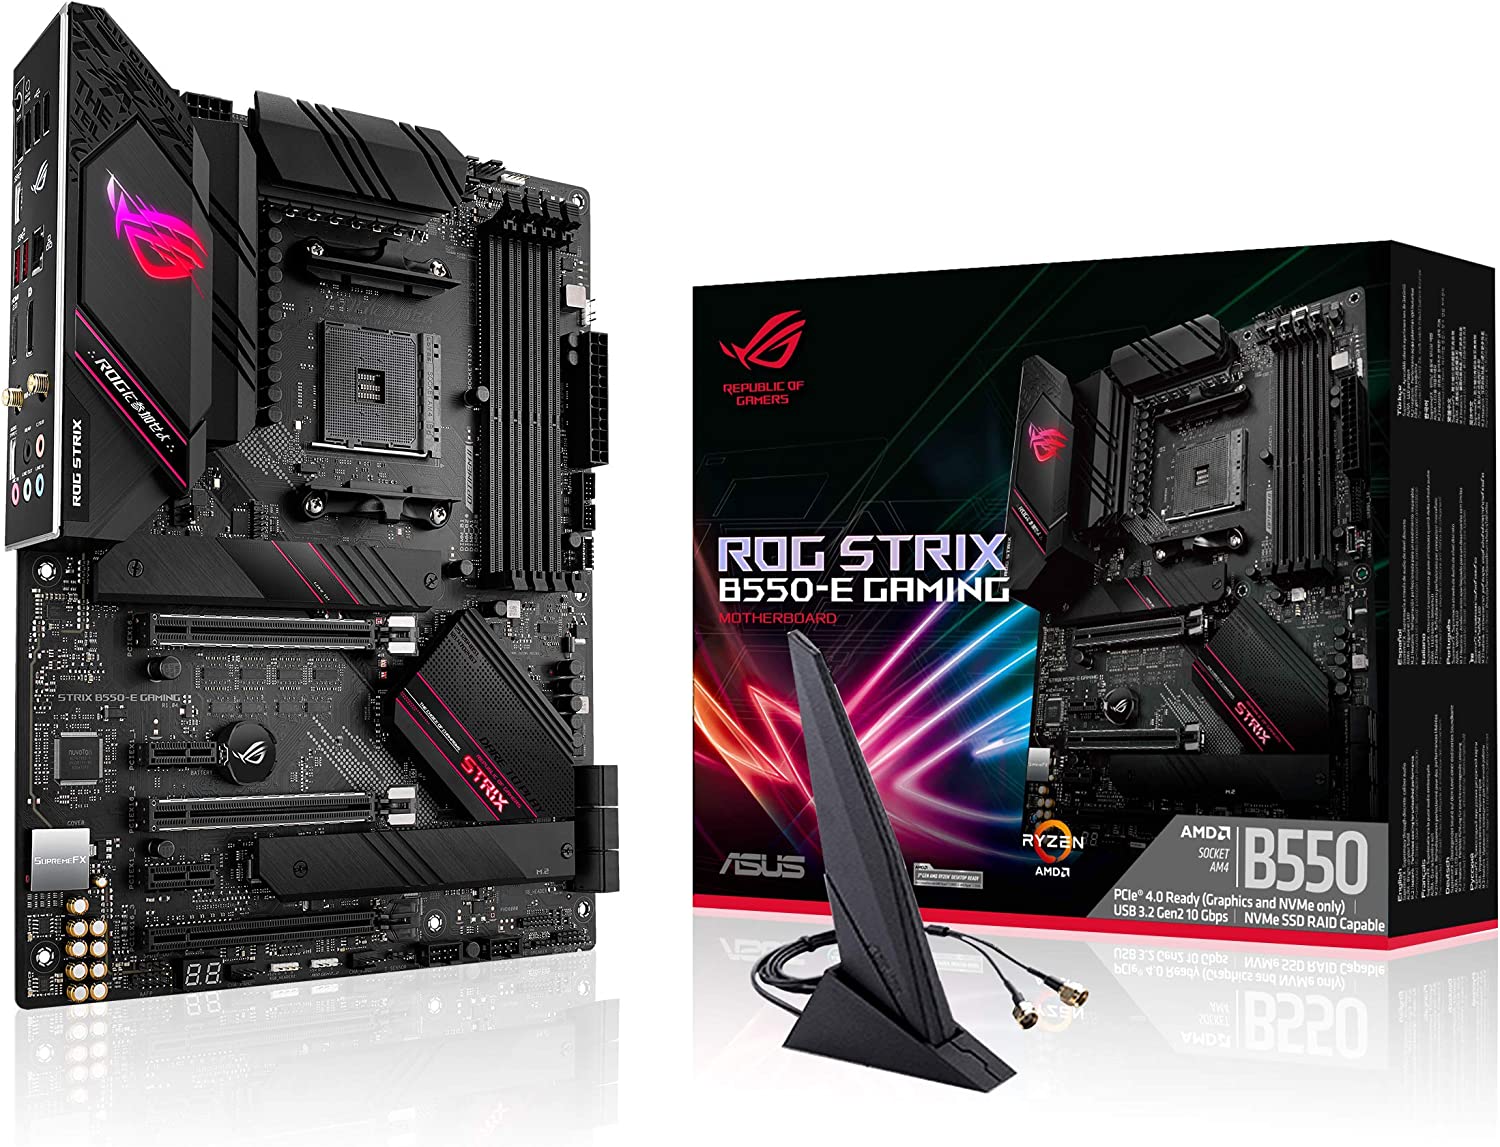 ASUS ROG Strix B550-E Gaming AMD AM4 3rd Gen Ryzen ATX Gaming Motherboard-PCIe 4.0, NVIDIA SLI, WiFi 6, 2.5Gb LAN, 14+2 Power Stages, USB 3.2 Type-C